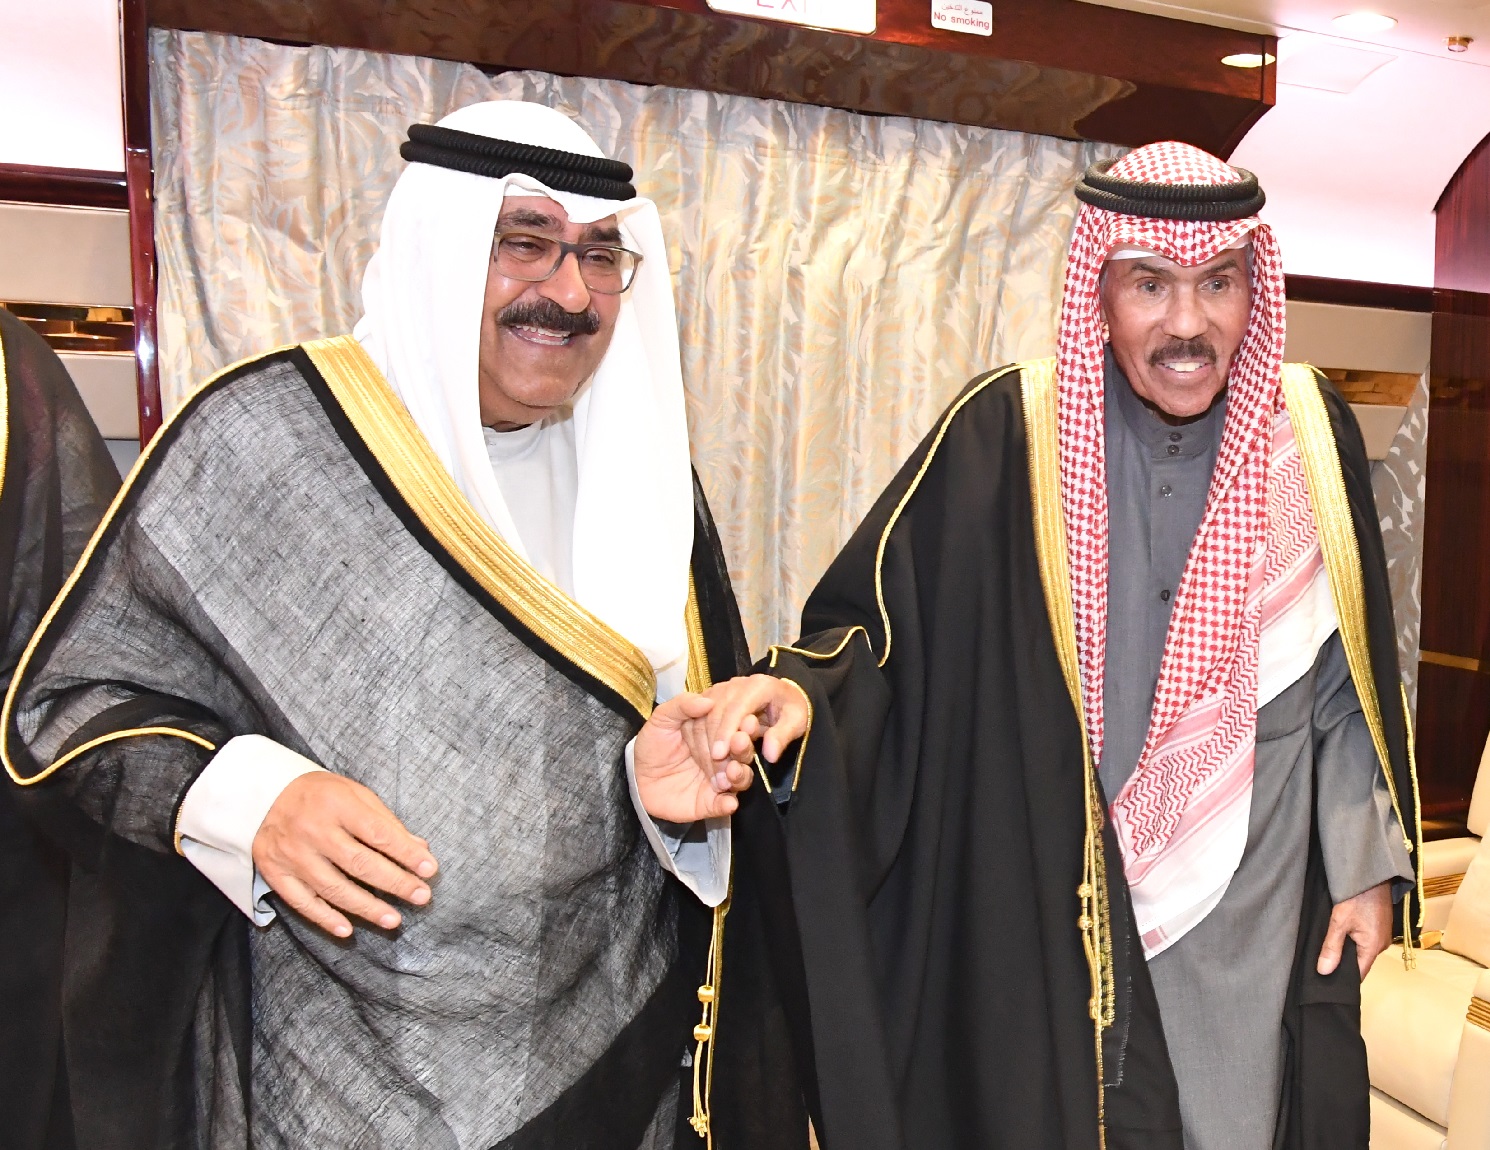 His Highness the Amir Sheikh Nawaf Al-Ahmad Al-Jaber Al-Sabah returns home from private leave